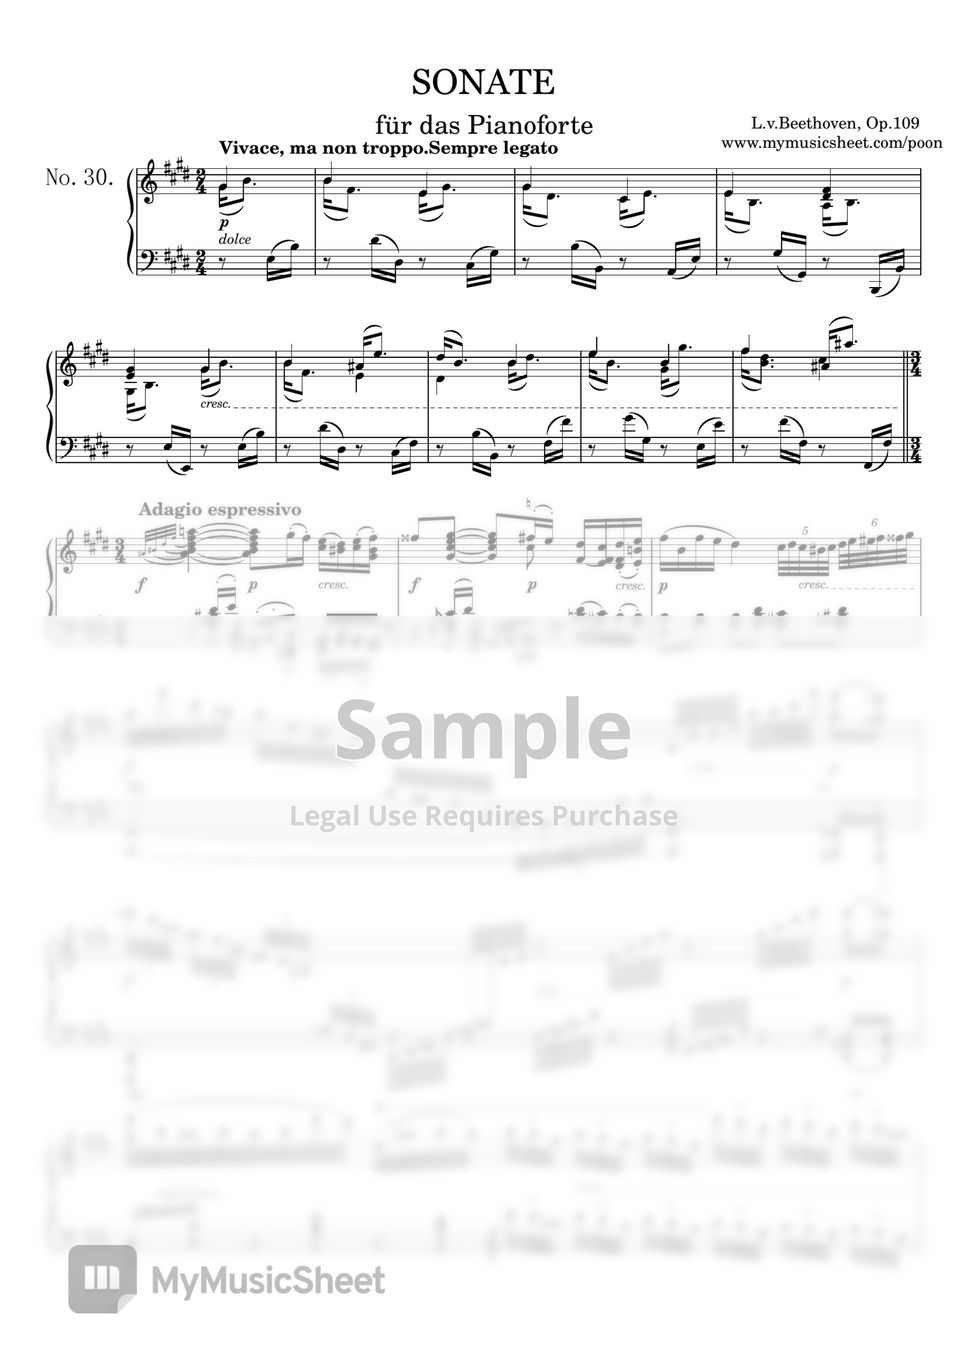 L.v.Beethoven - Beethoven SONATE No.30 Op.109 für das Pianoforte piano solo sheet Sonata in E-dur by poon